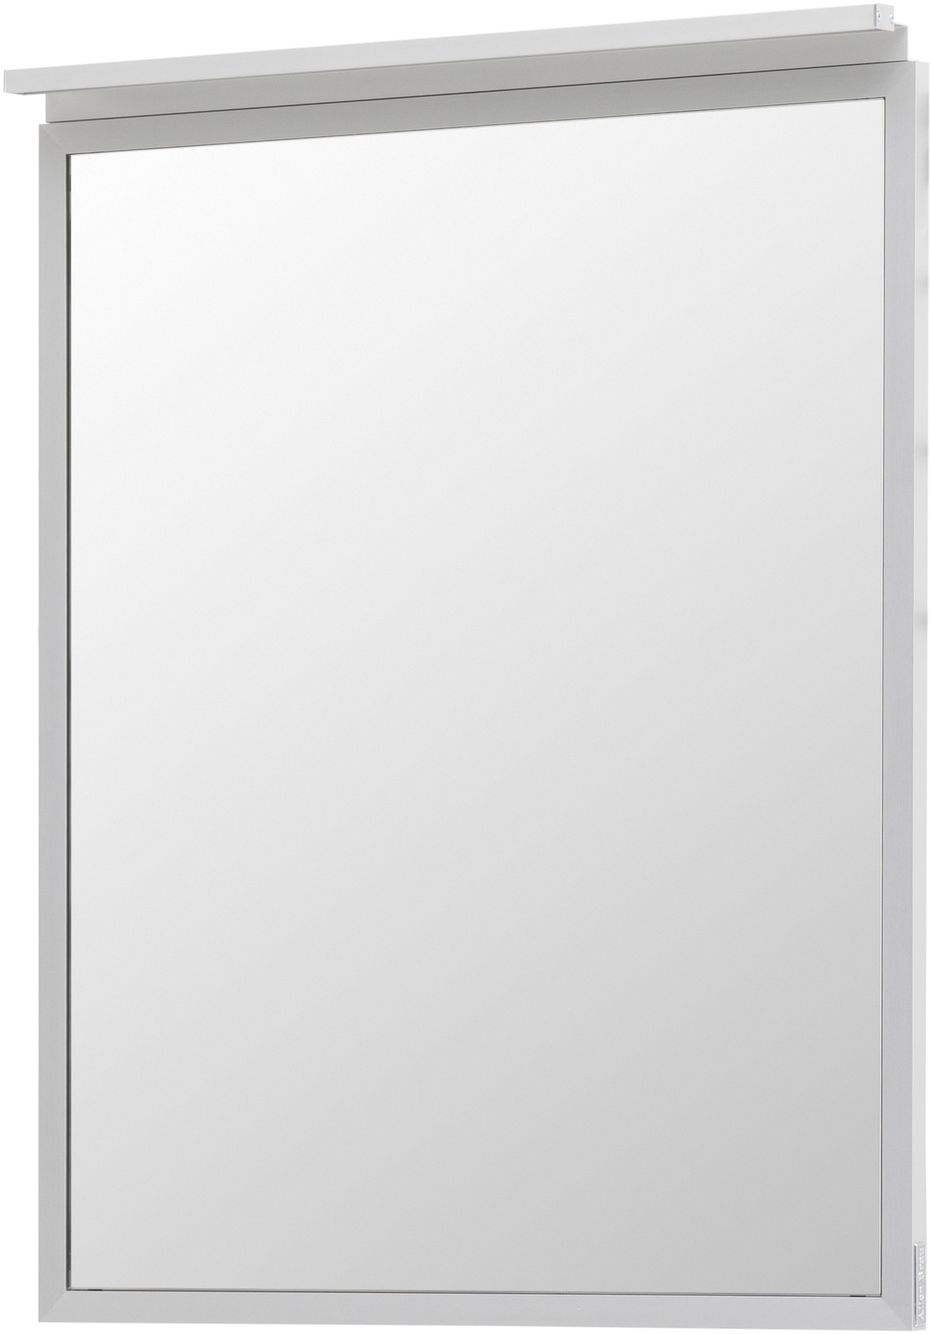 Зеркало Allen Brau Priority 60 см, серебро браш 1.31013.02